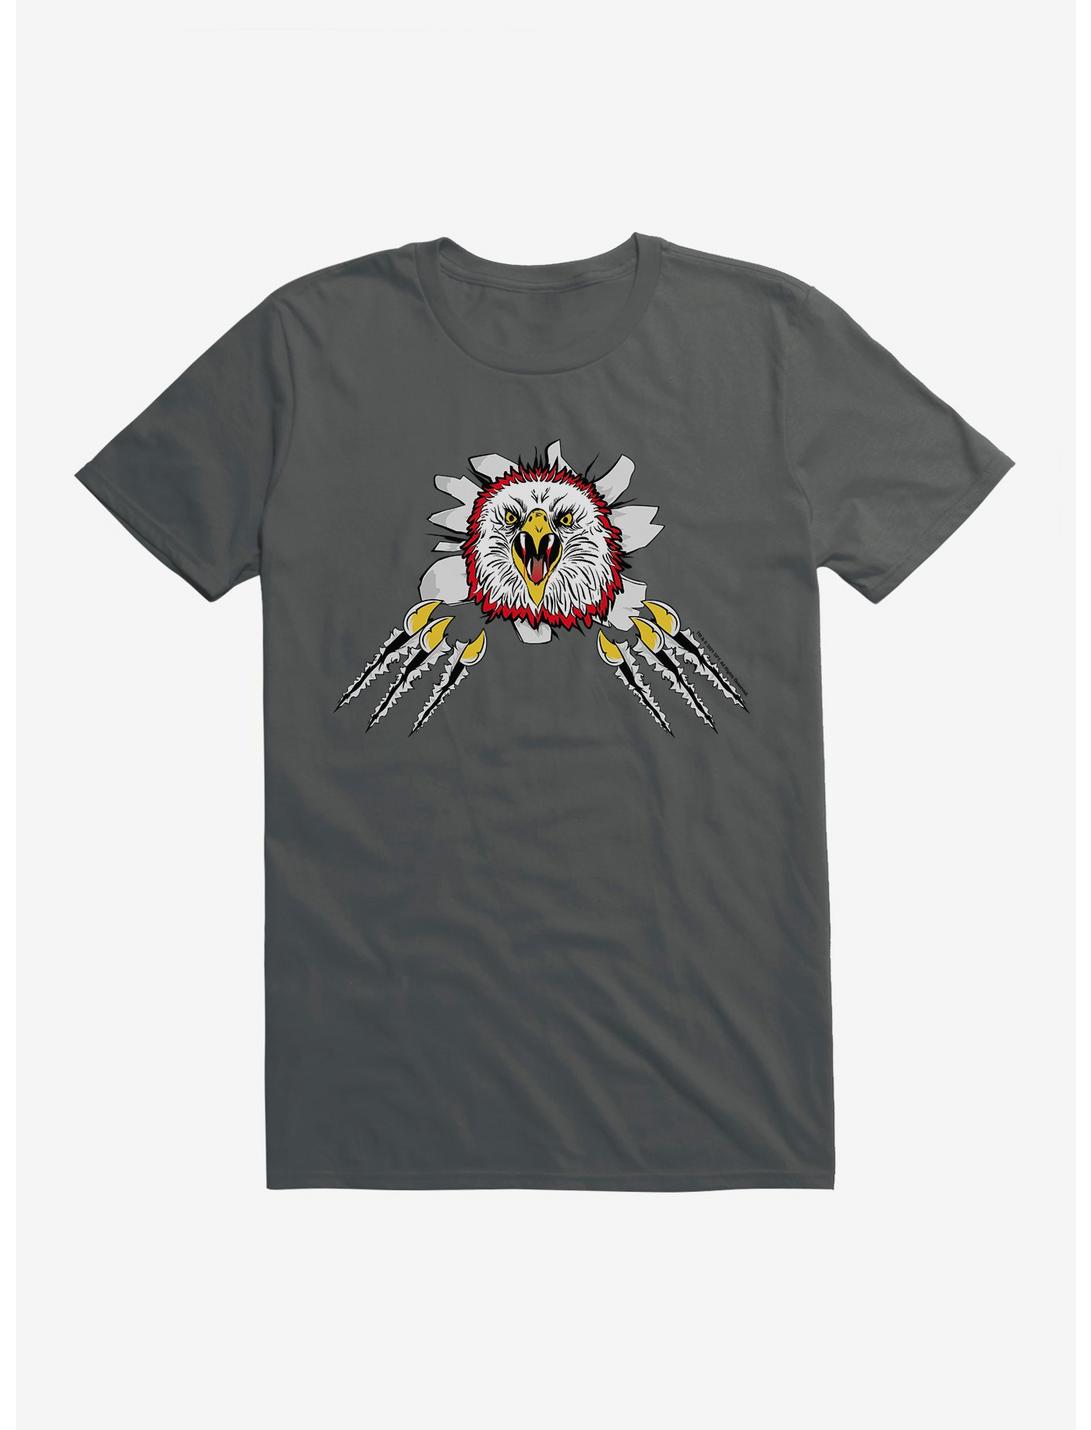 COBRA KAI S4 Eagle Logo T-Shirt, CHARCOAL, hi-res